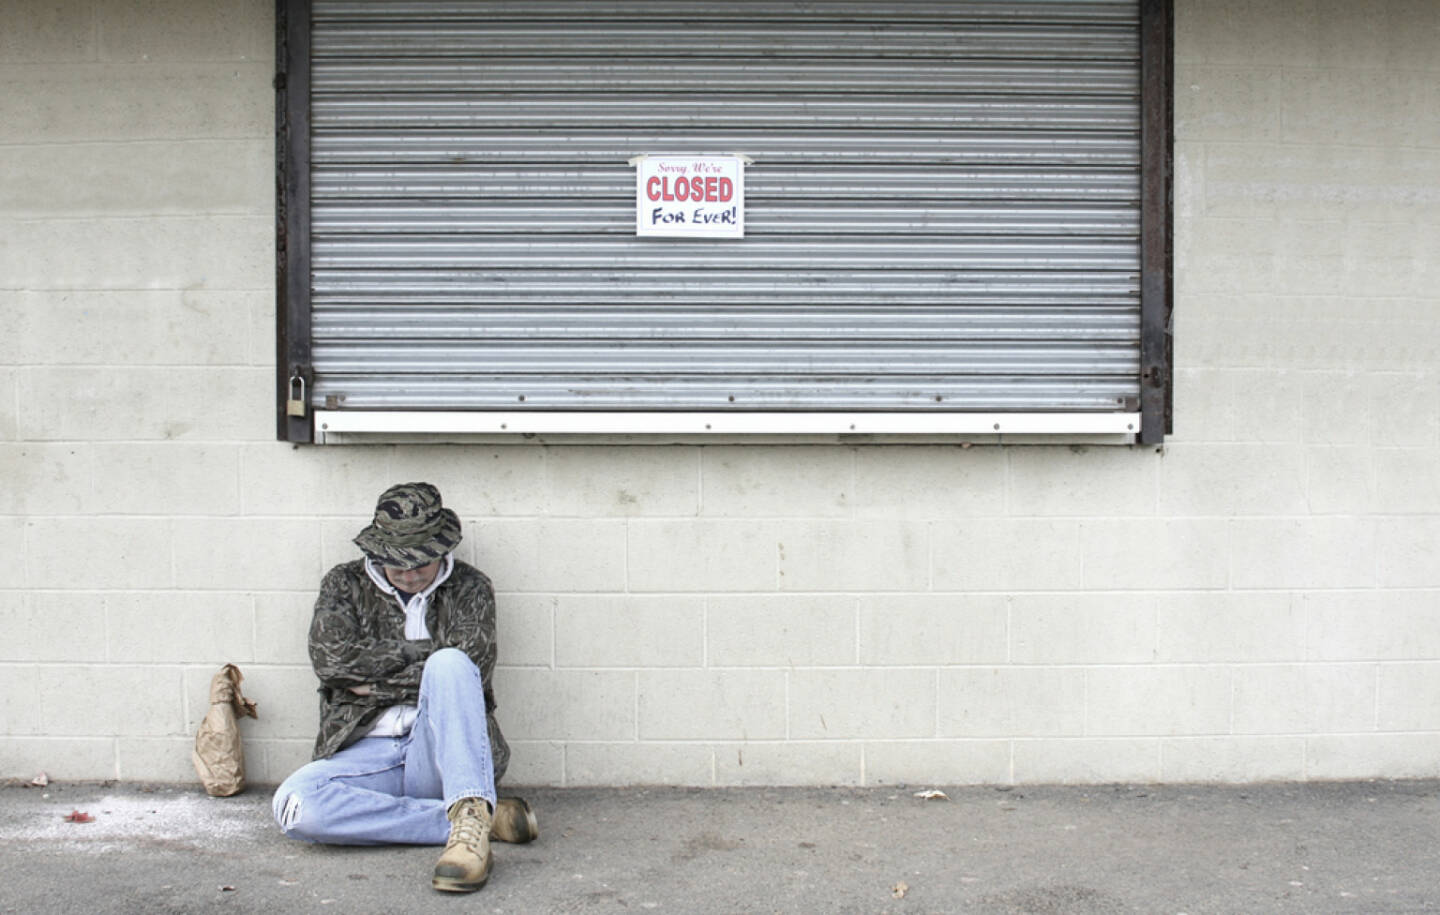 geschlossen, closed, Ende, zu, Armut, traurig, verloren, bankrott, pleite, http://www.shutterstock.com/de/pic-6817387/stock-photo-homeless-man-outside-of-a-closed-business-that-has-gone-bankrupt.html 